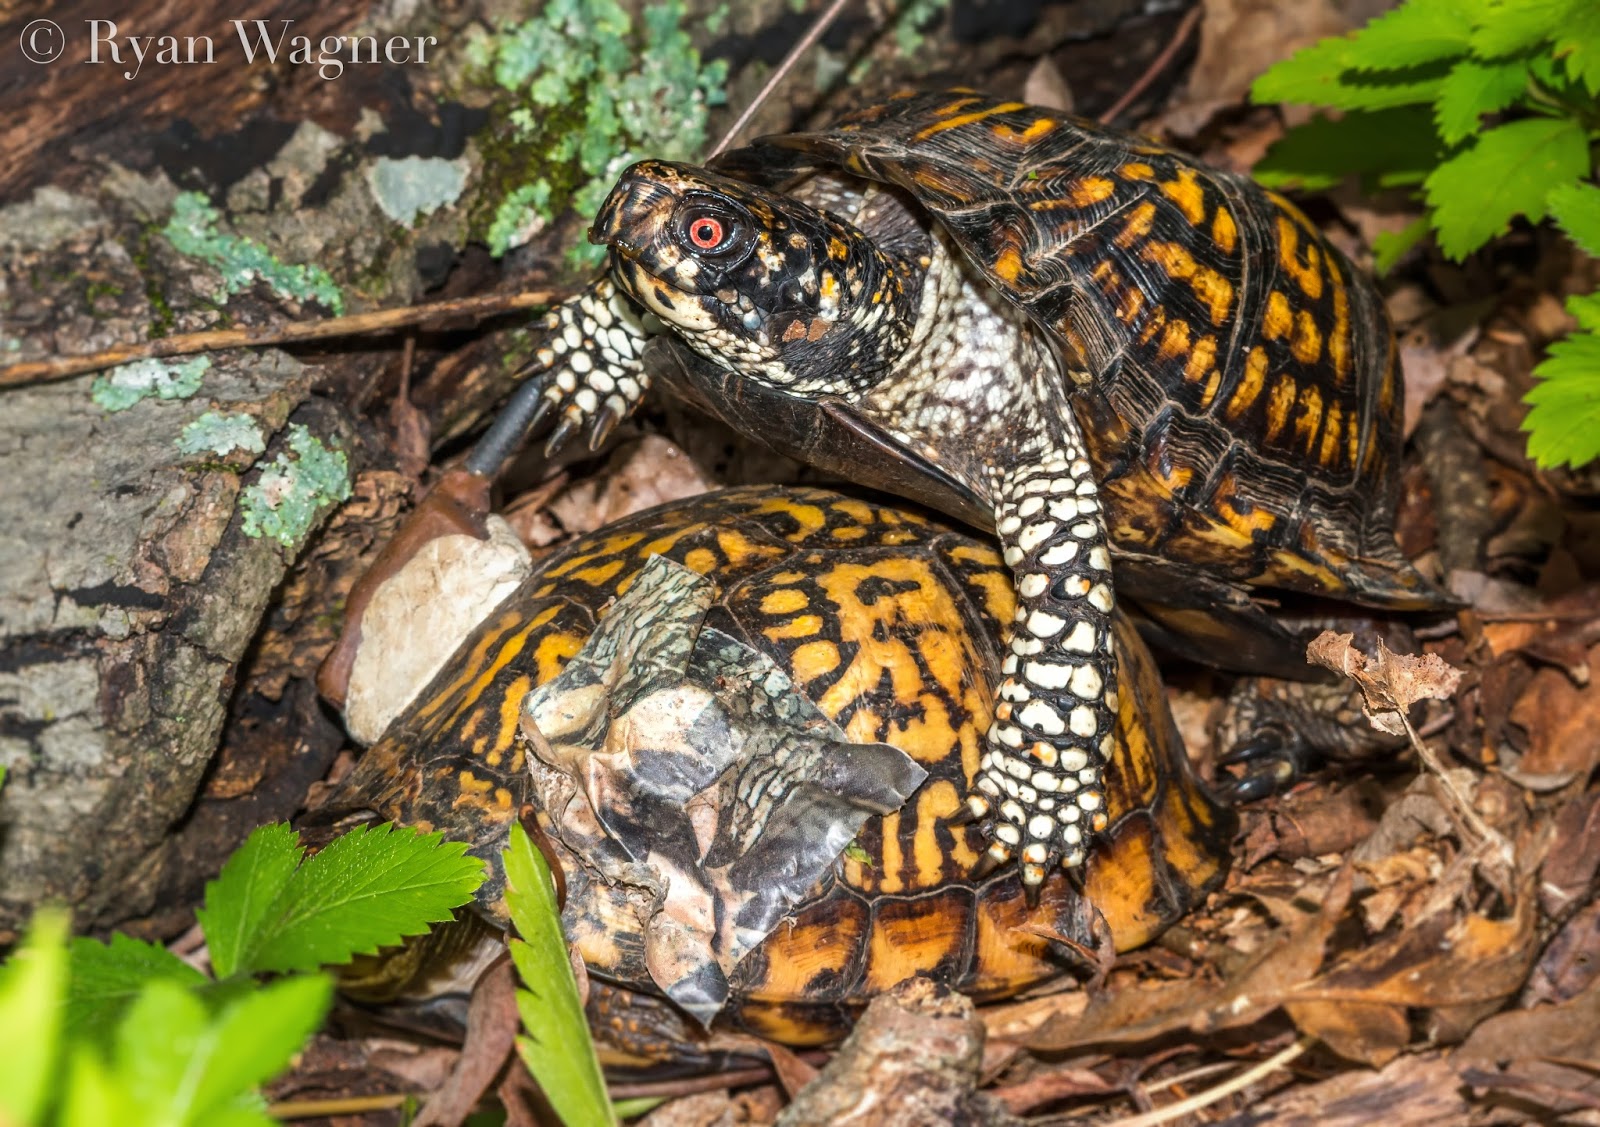 Field Life: A Turtle Team Update